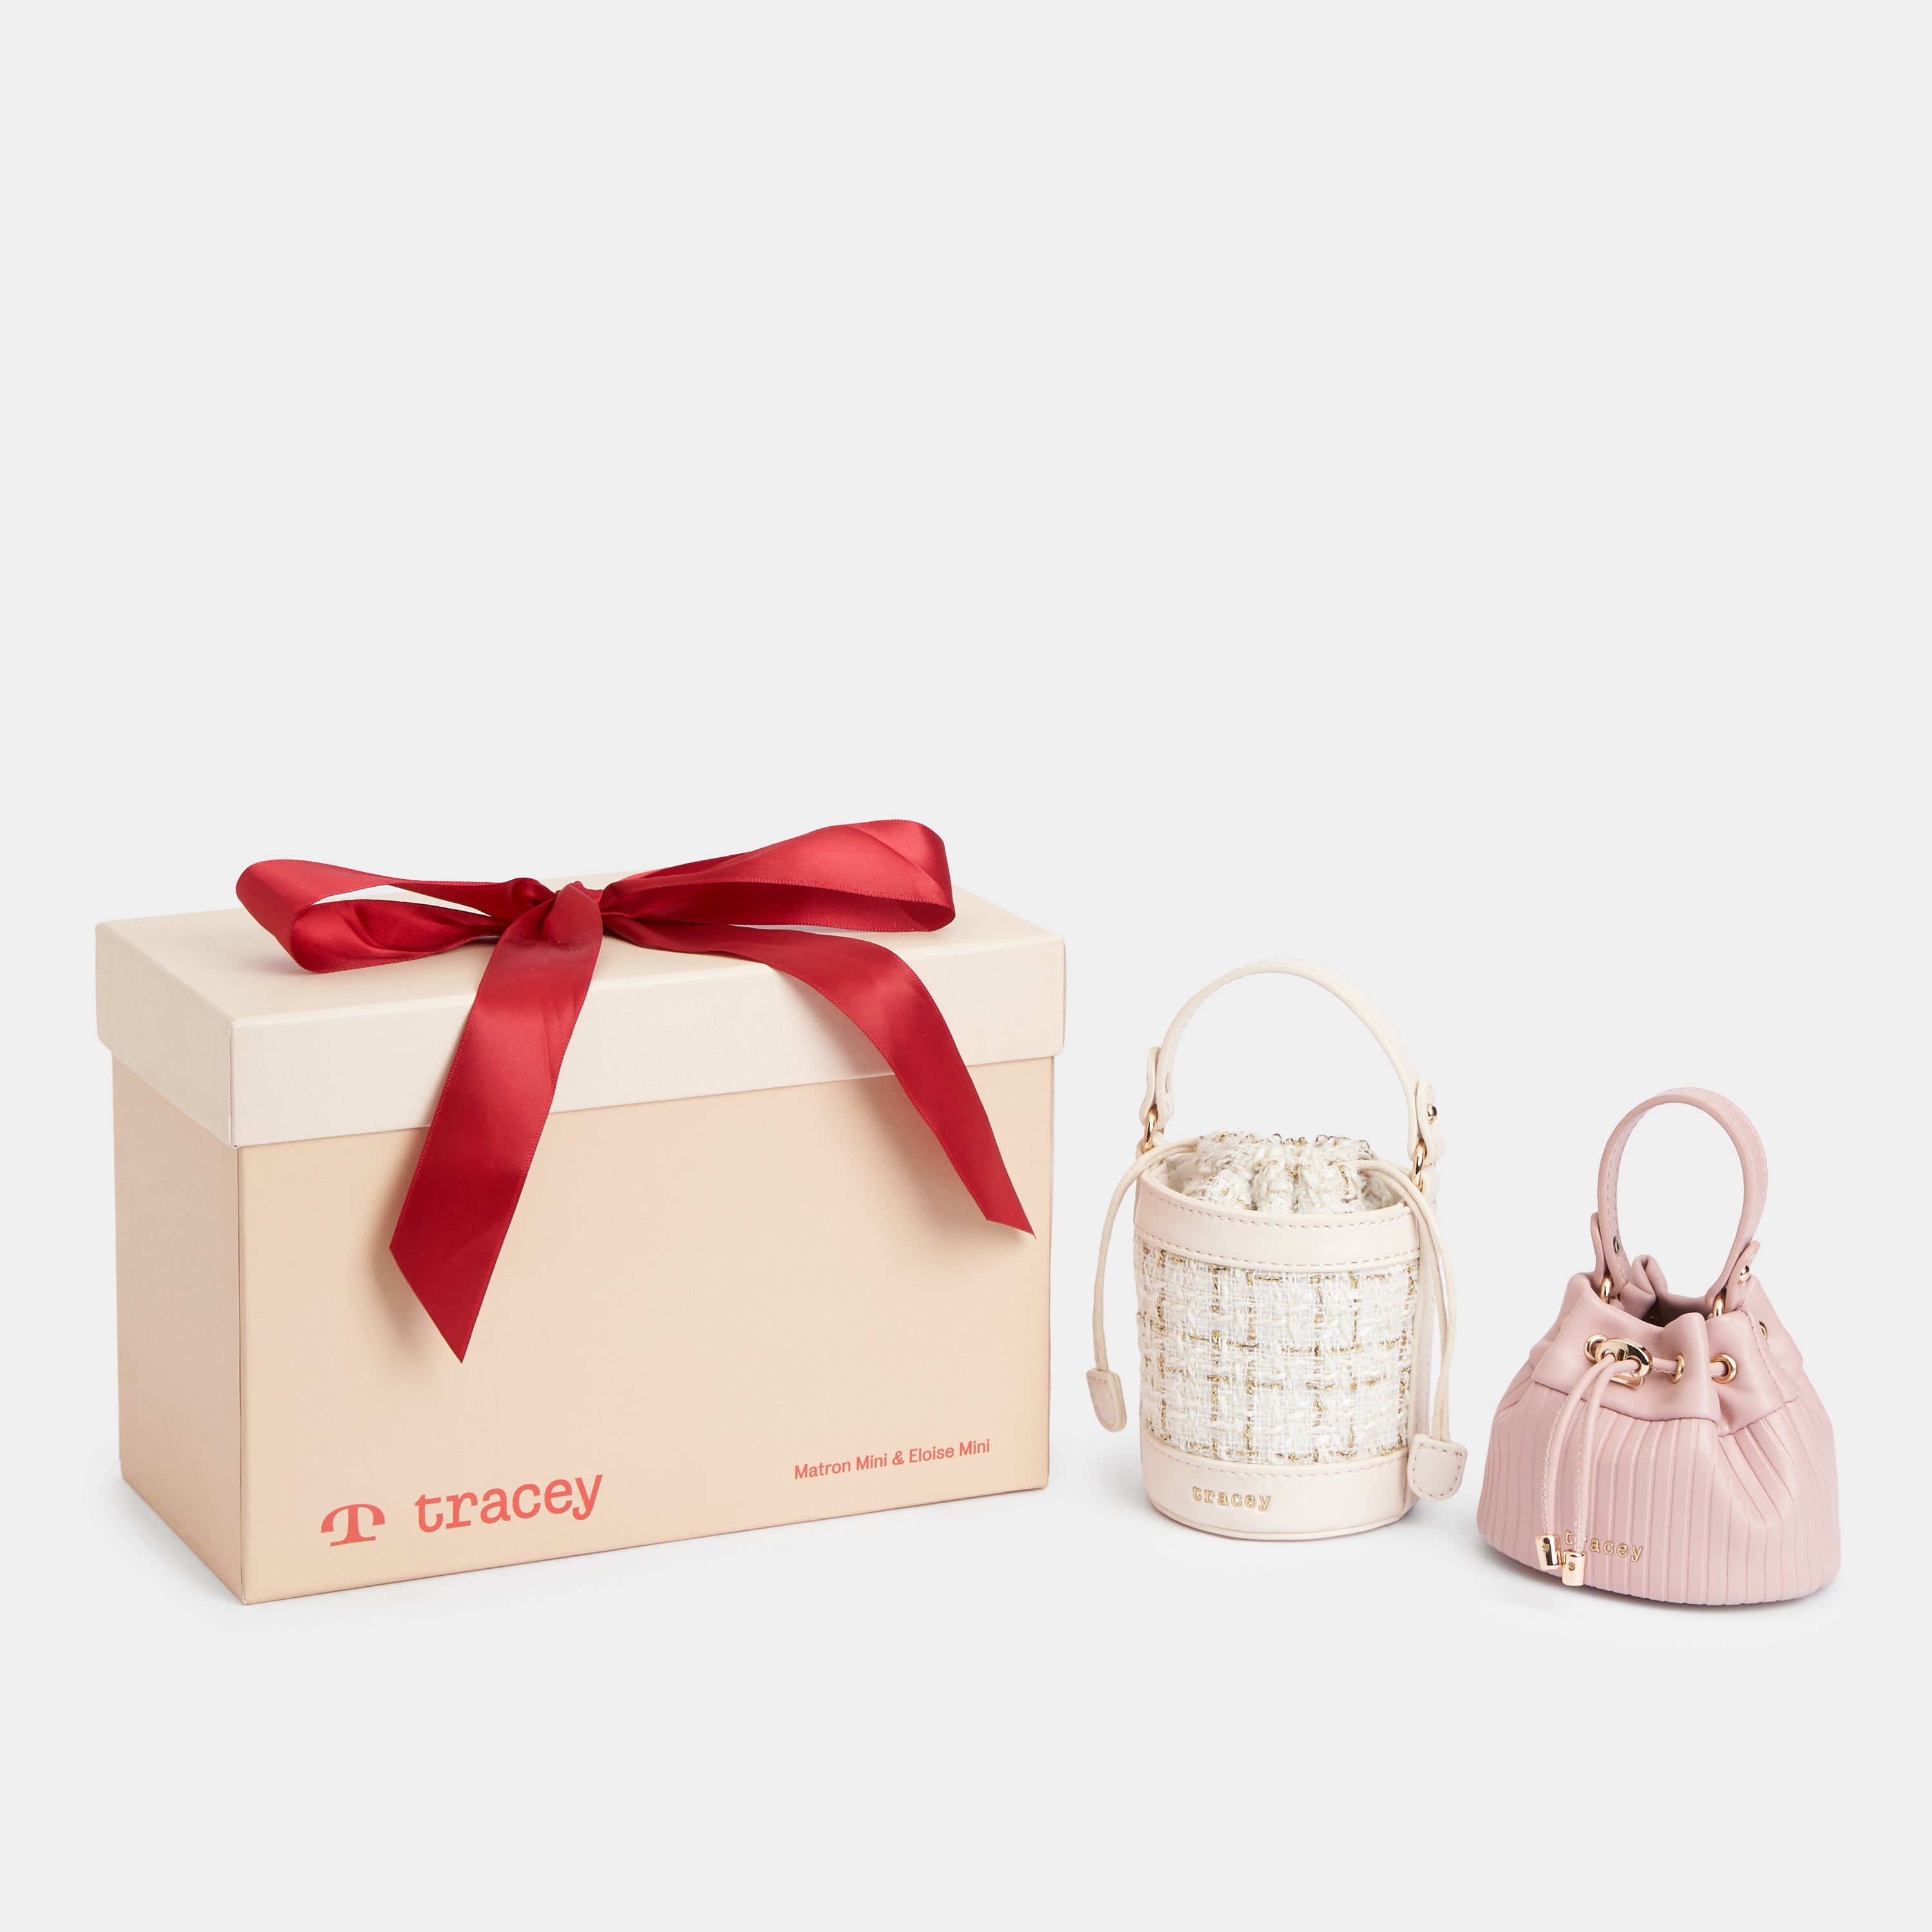 Tracey Mini Box of Delight Gift Set